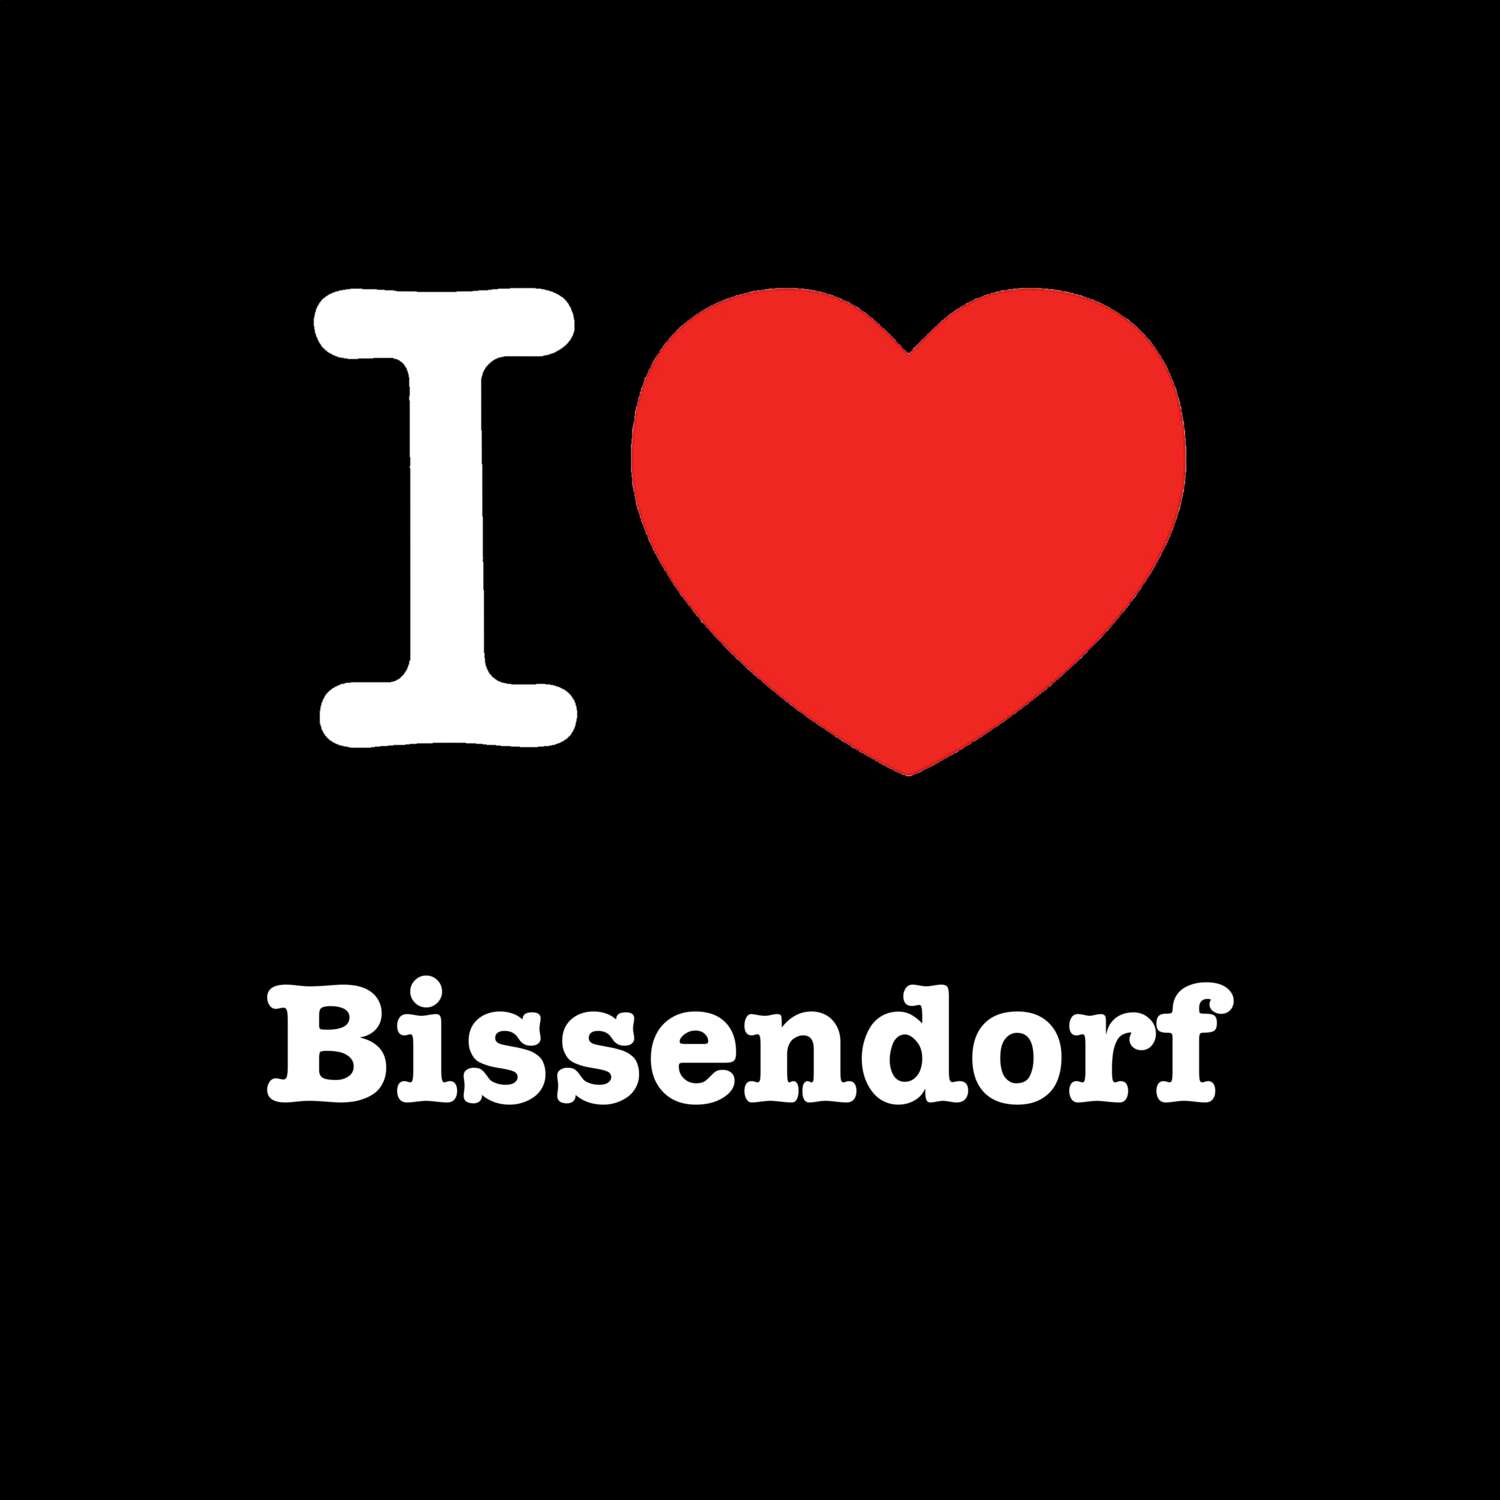 Bissendorf T-Shirt »I love«